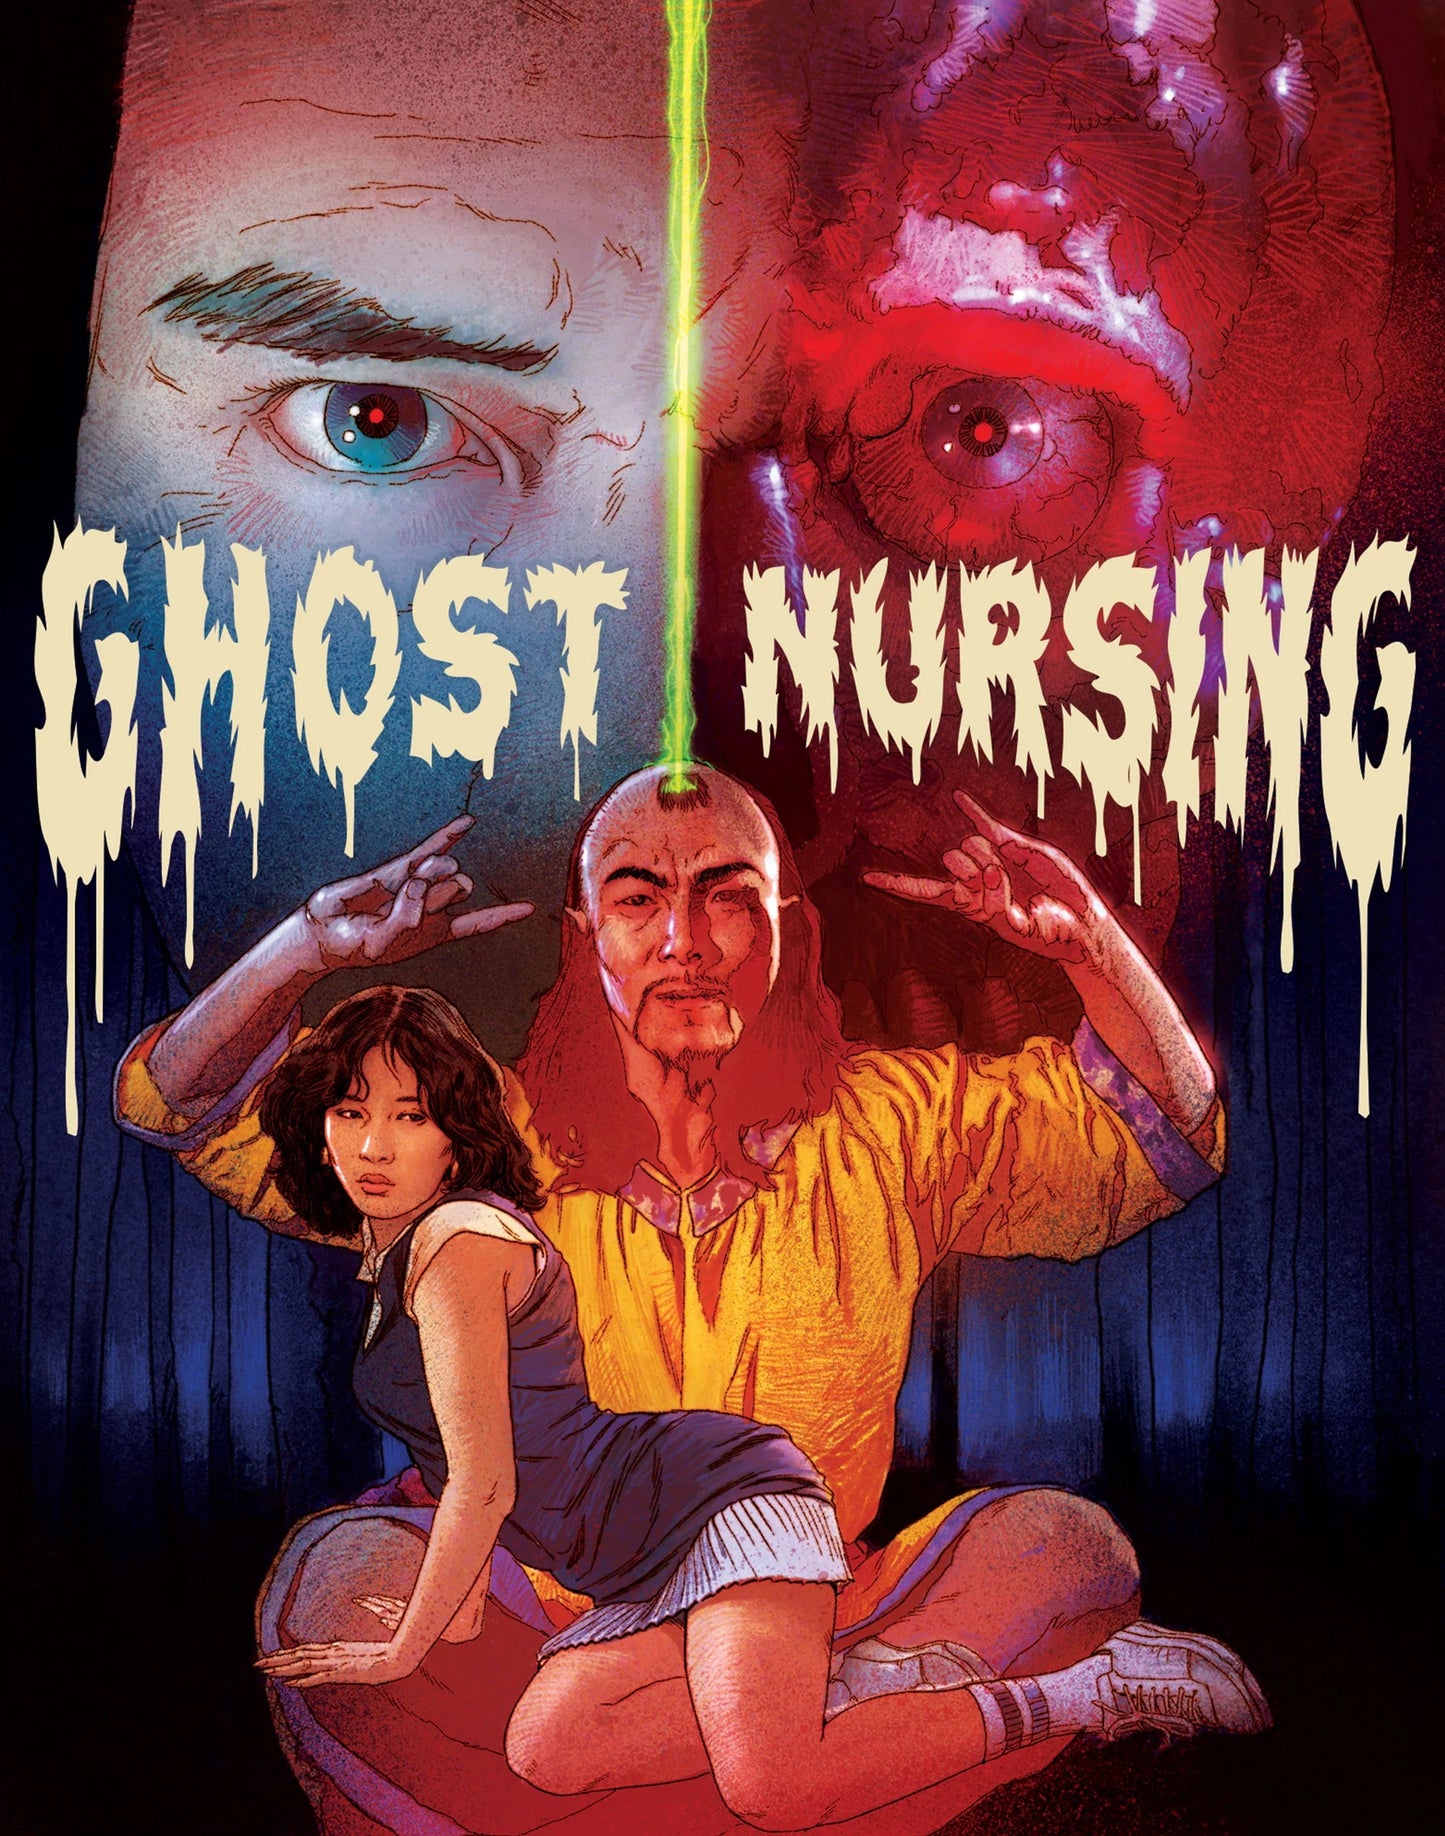 Ghost Nursing Limited Edition Vinegar Syndrome Blu-Ray [PRE-ORDER] [SLIPCOVER]